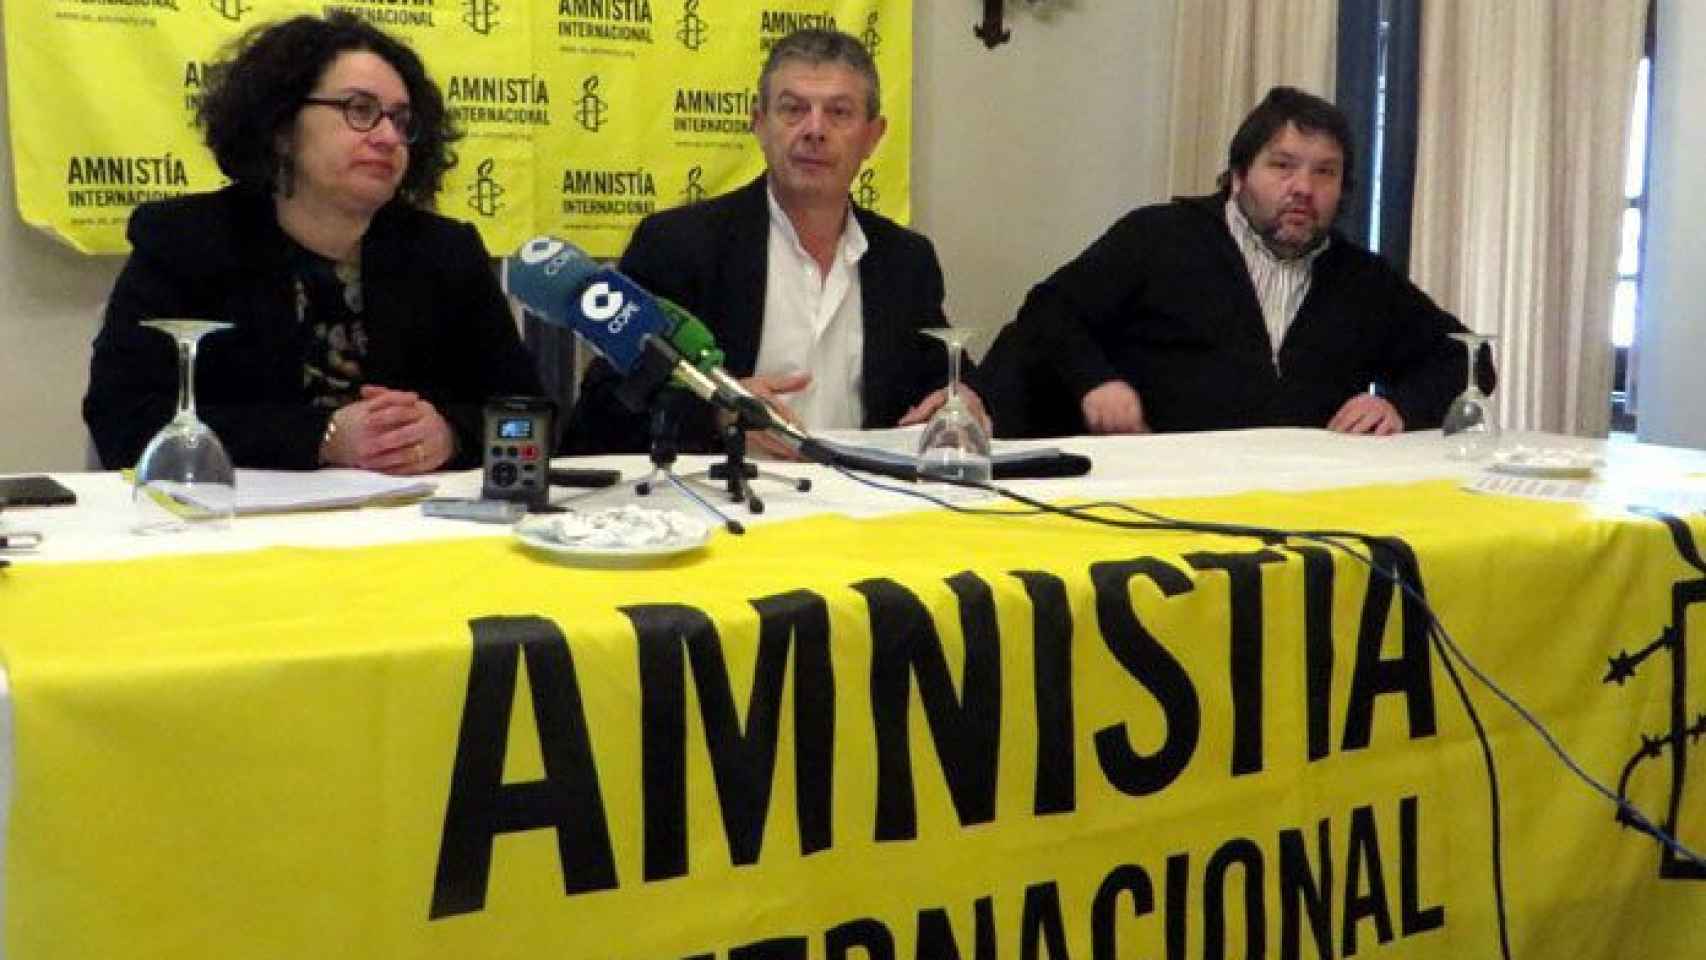 Zamora amnistia internacional 2